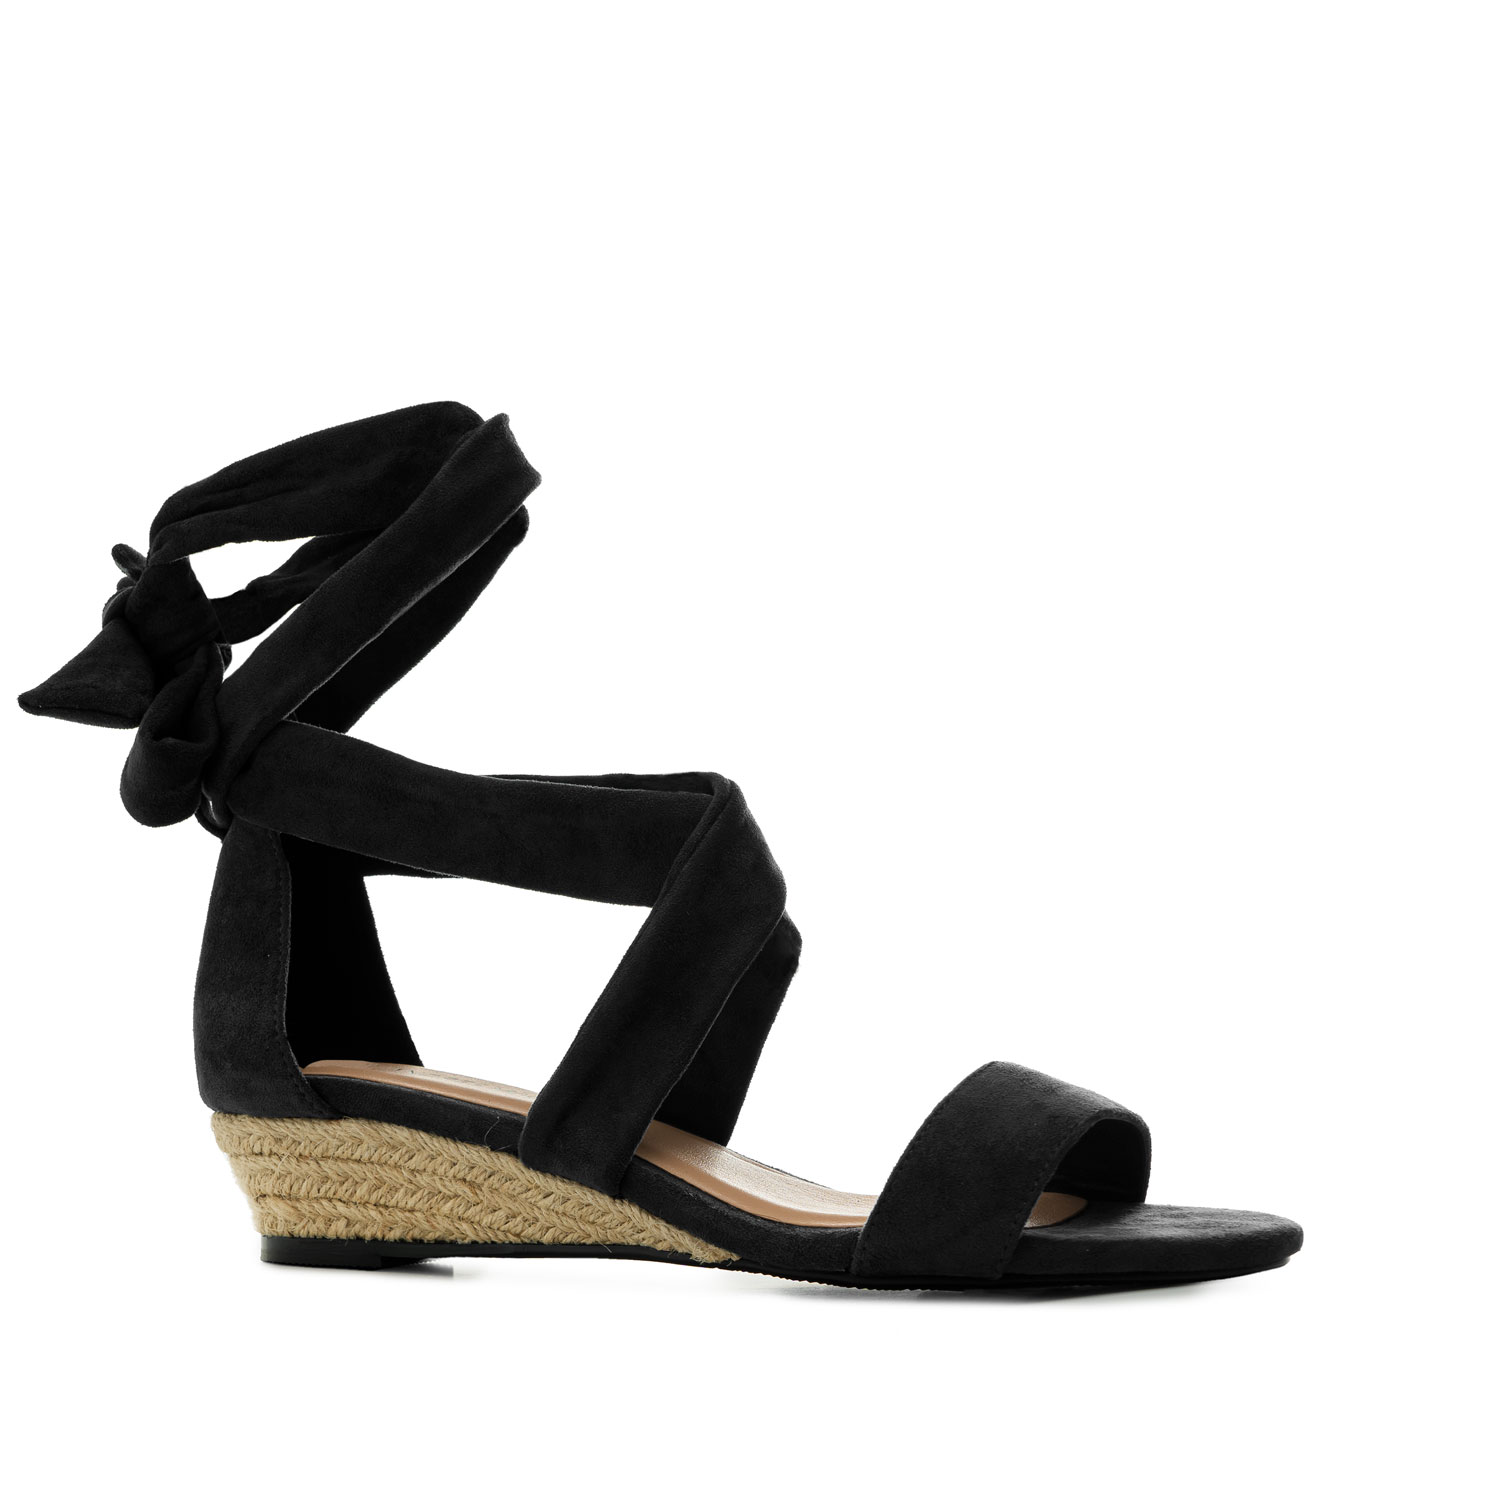 Ankle-tie Low Wedges in Black Suedette - Women, Sandals, Women, Heeled ...